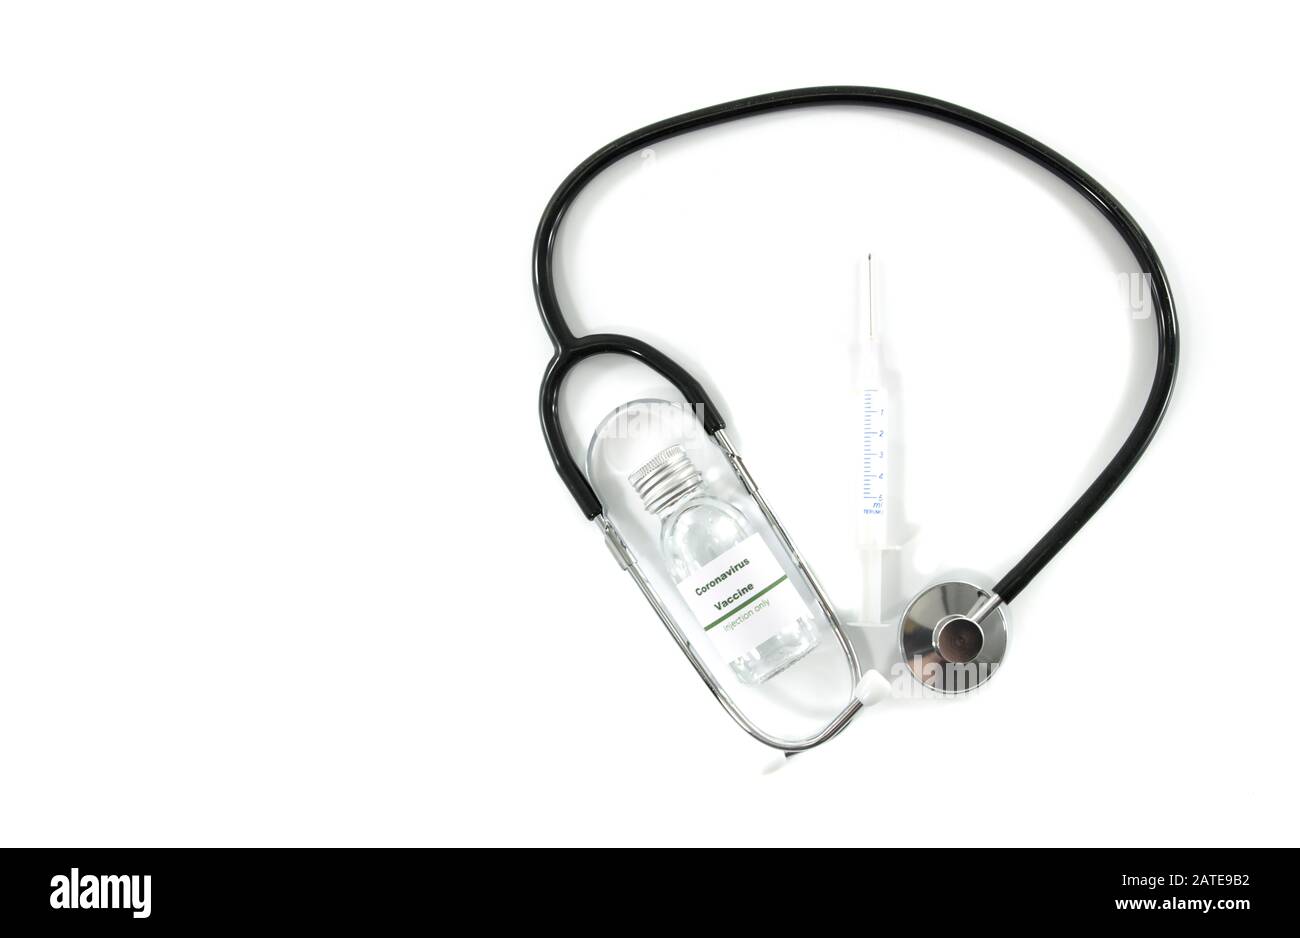 Coronavirus vaccine vial with injection syringe isolated and stethoscope on white background Stock Photo